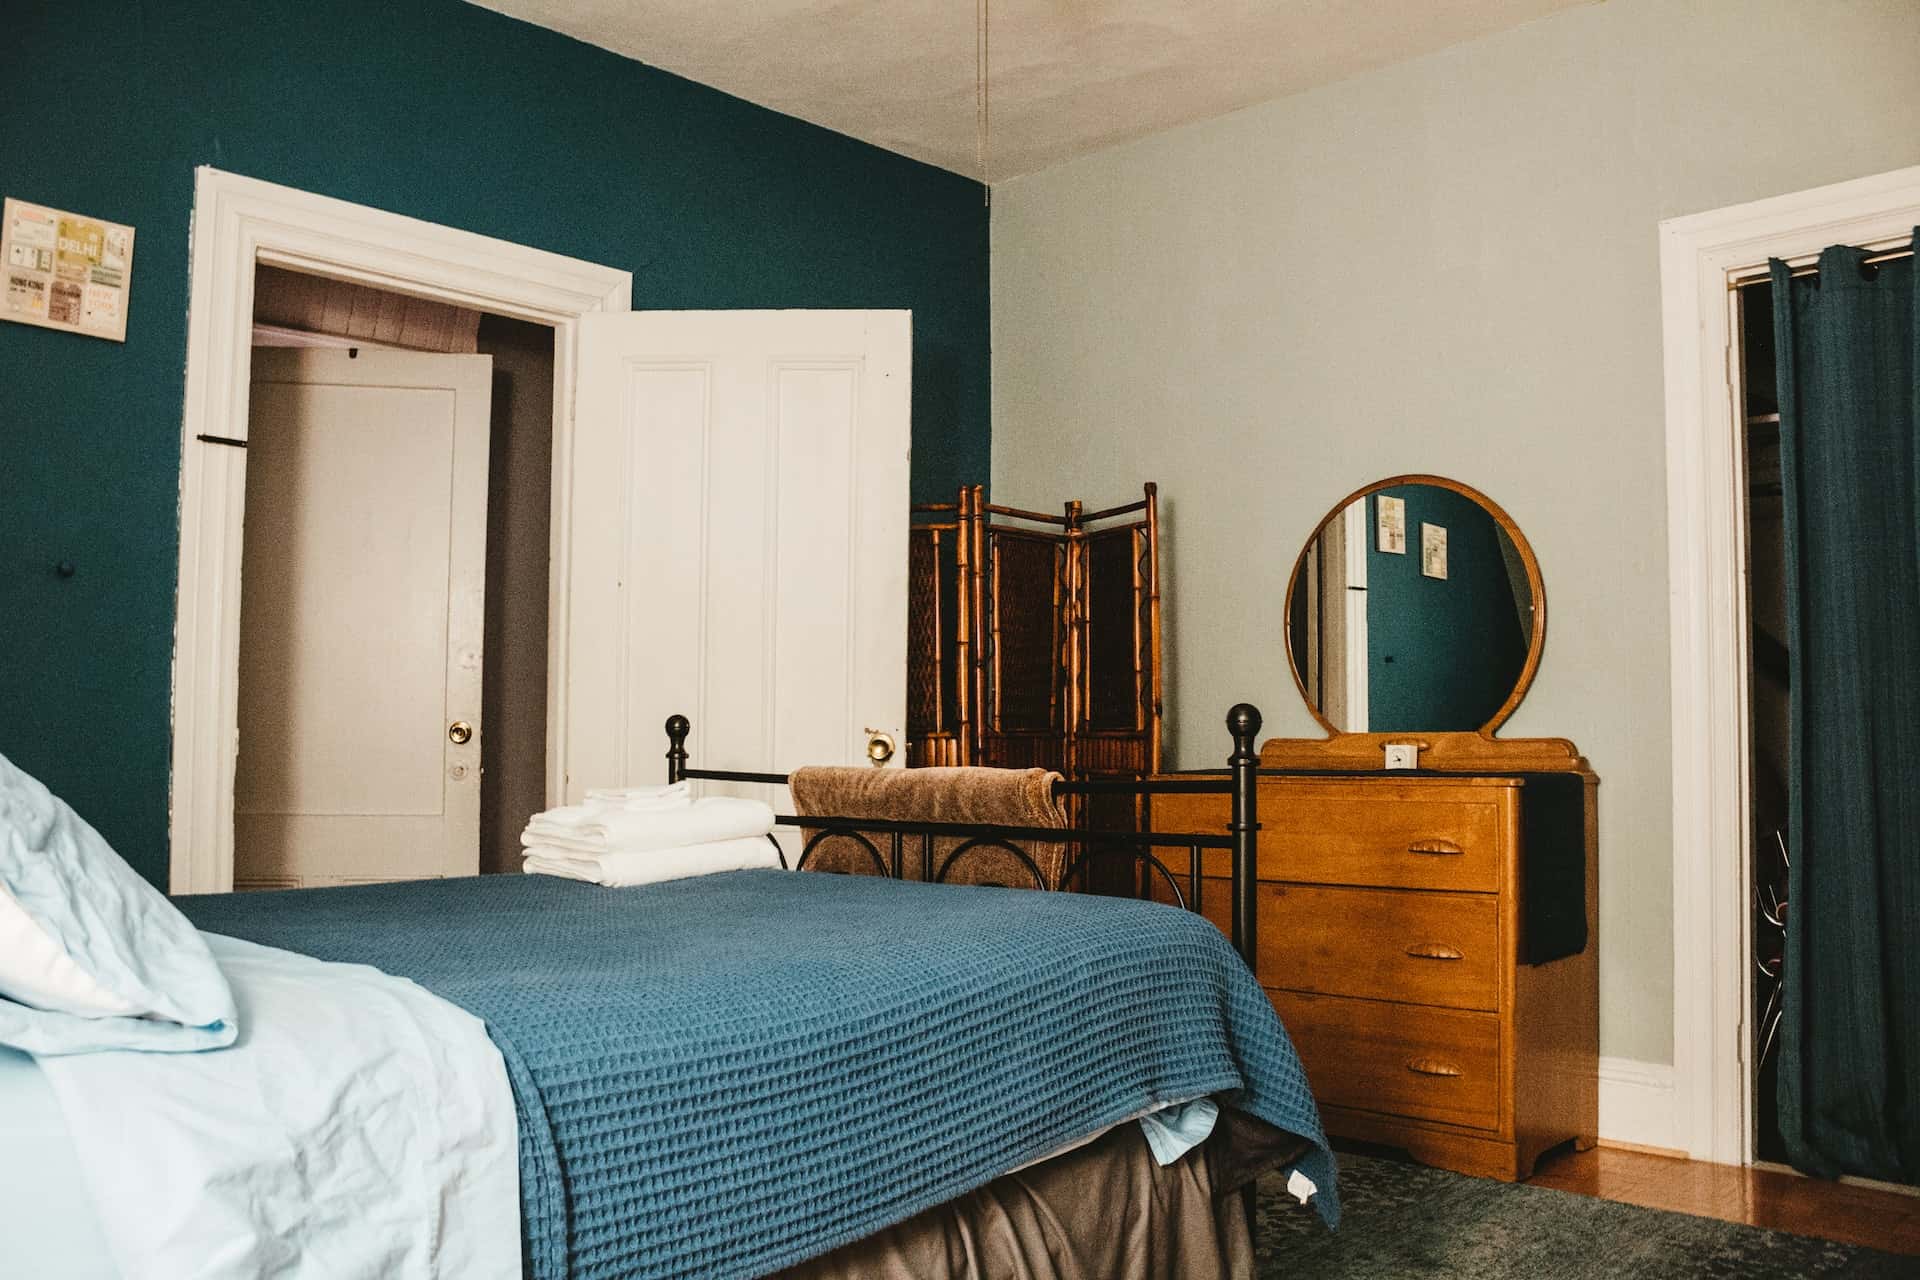 greenish-blue shade teal bedroom